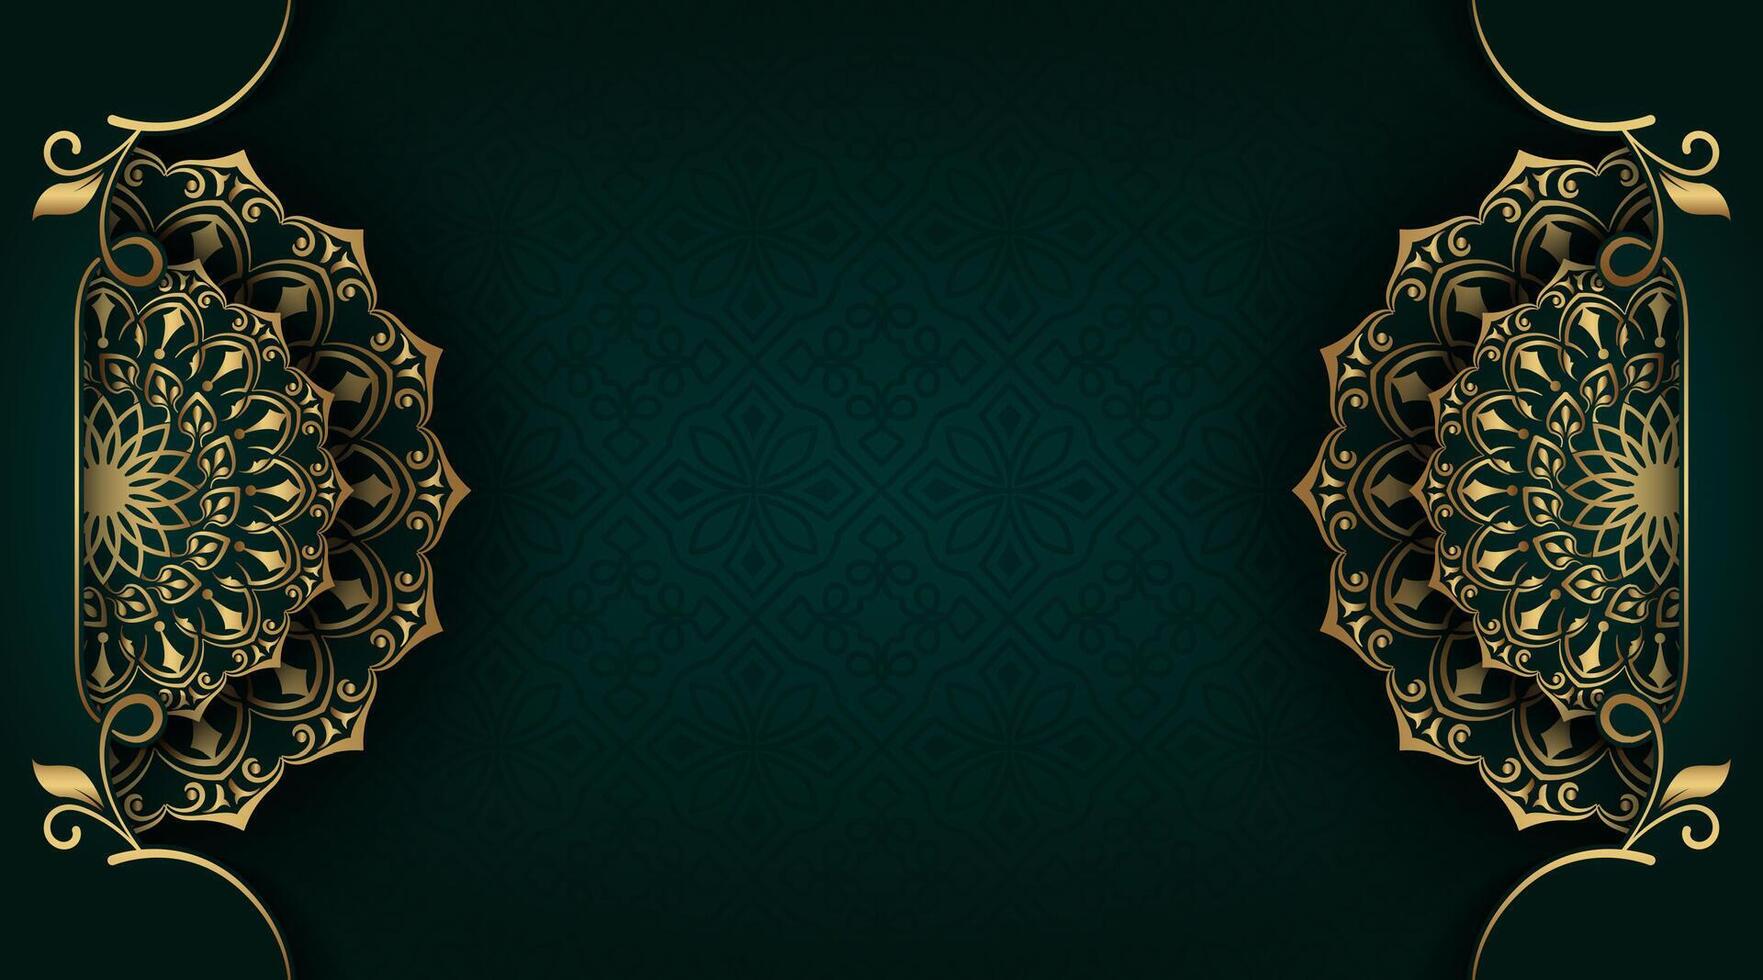 dark green background with gold mandala ornament vector